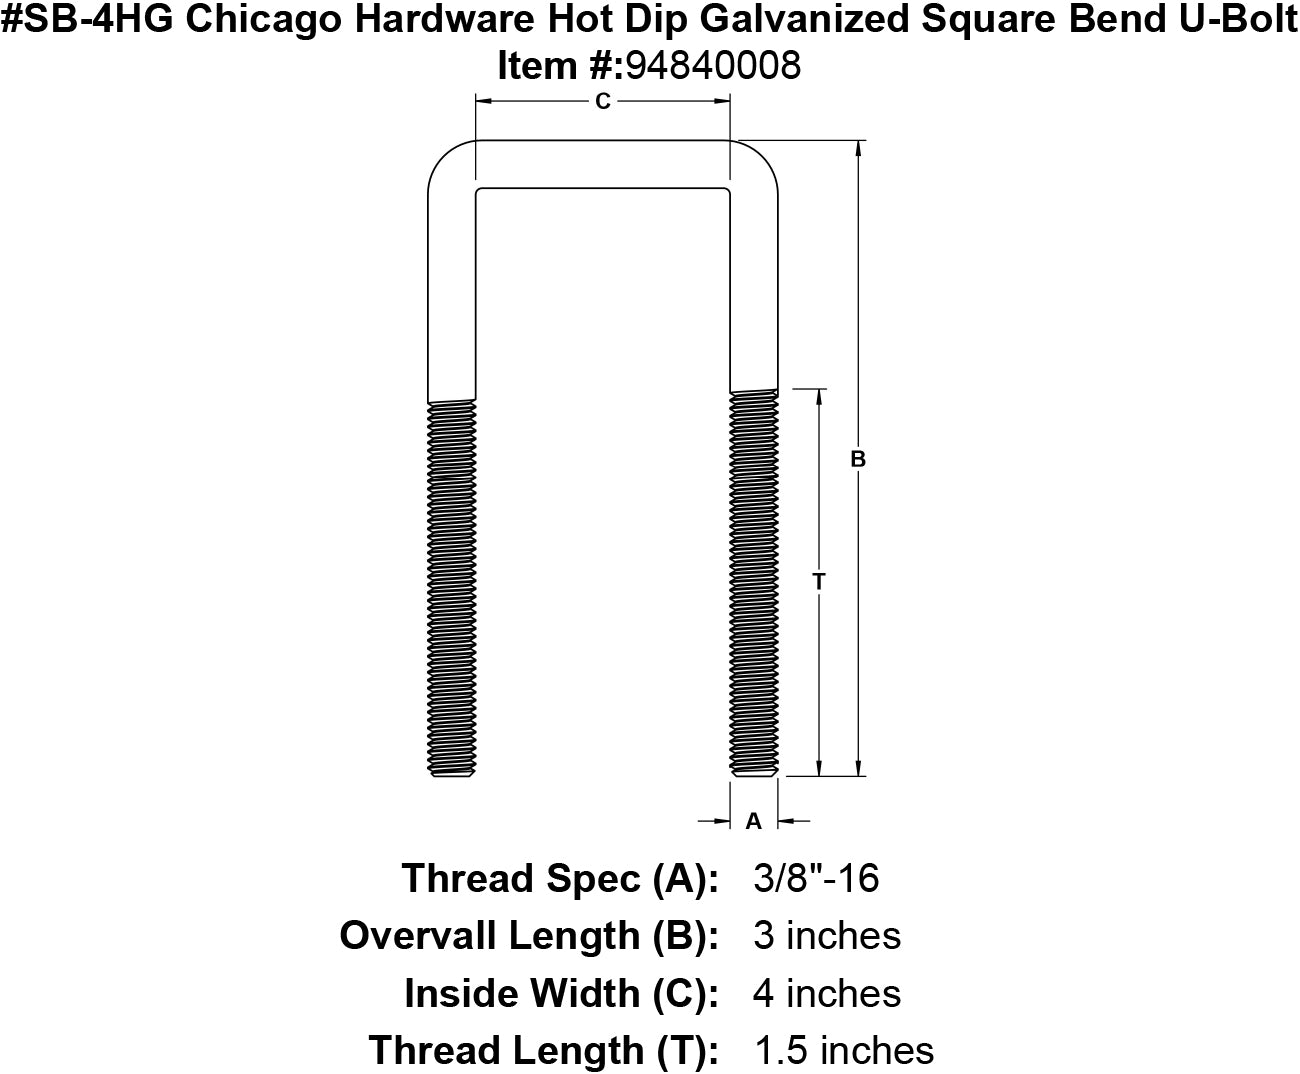 Chicago Hardware Hot Dip Galvanized Square Bend U-Bolts